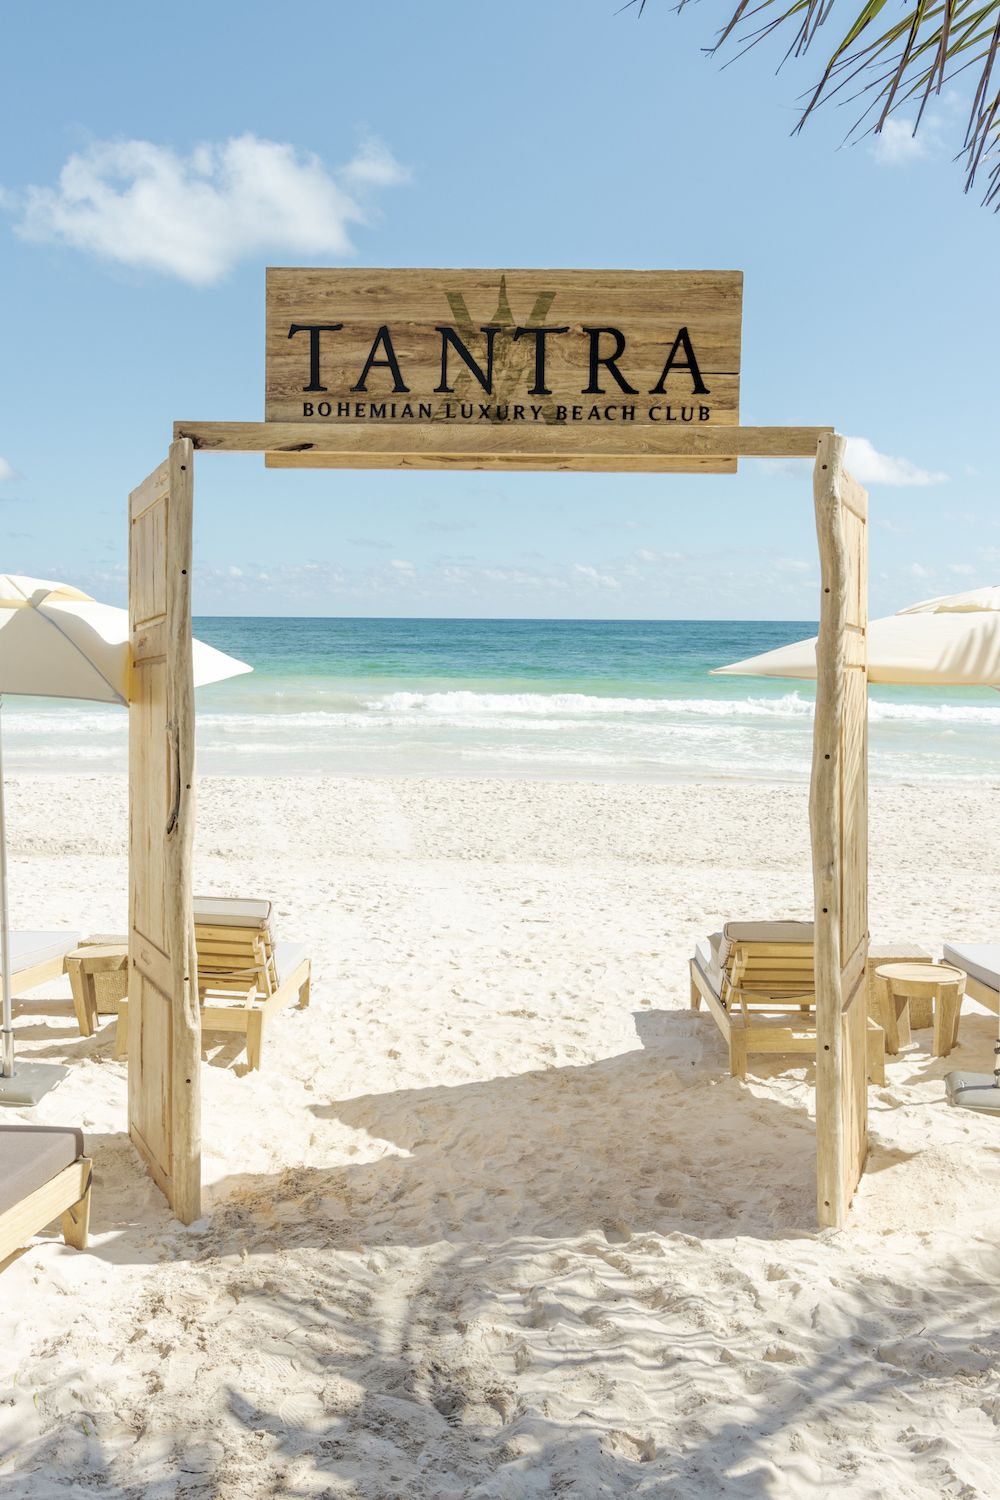 Tantra Bohemiam Luxury Beach Club Tulum: Audaz, bohemio y sofisticado